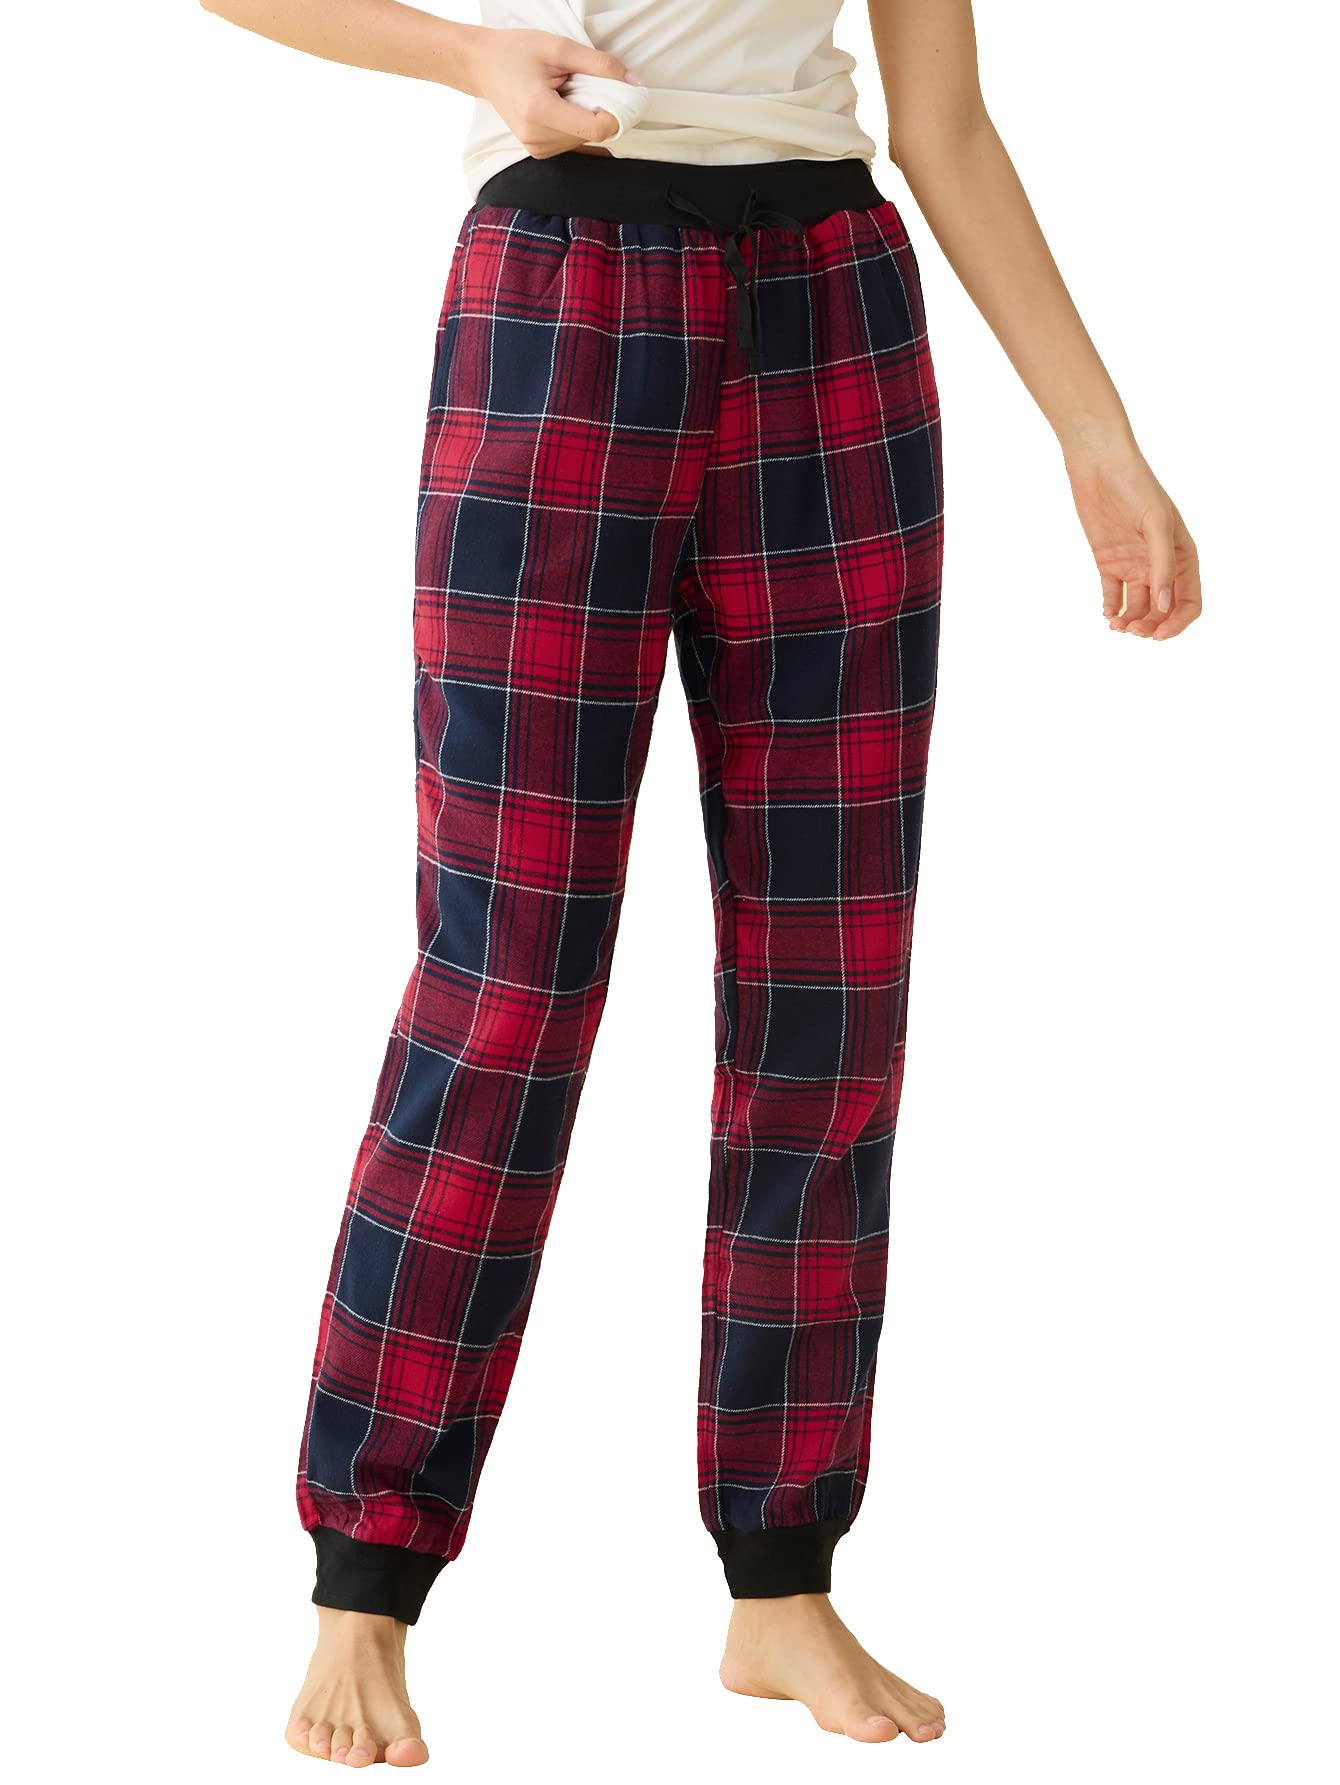 Lucky Brand Women's Pajama Pants - 2 Pack Hacci Sleep and Lounge